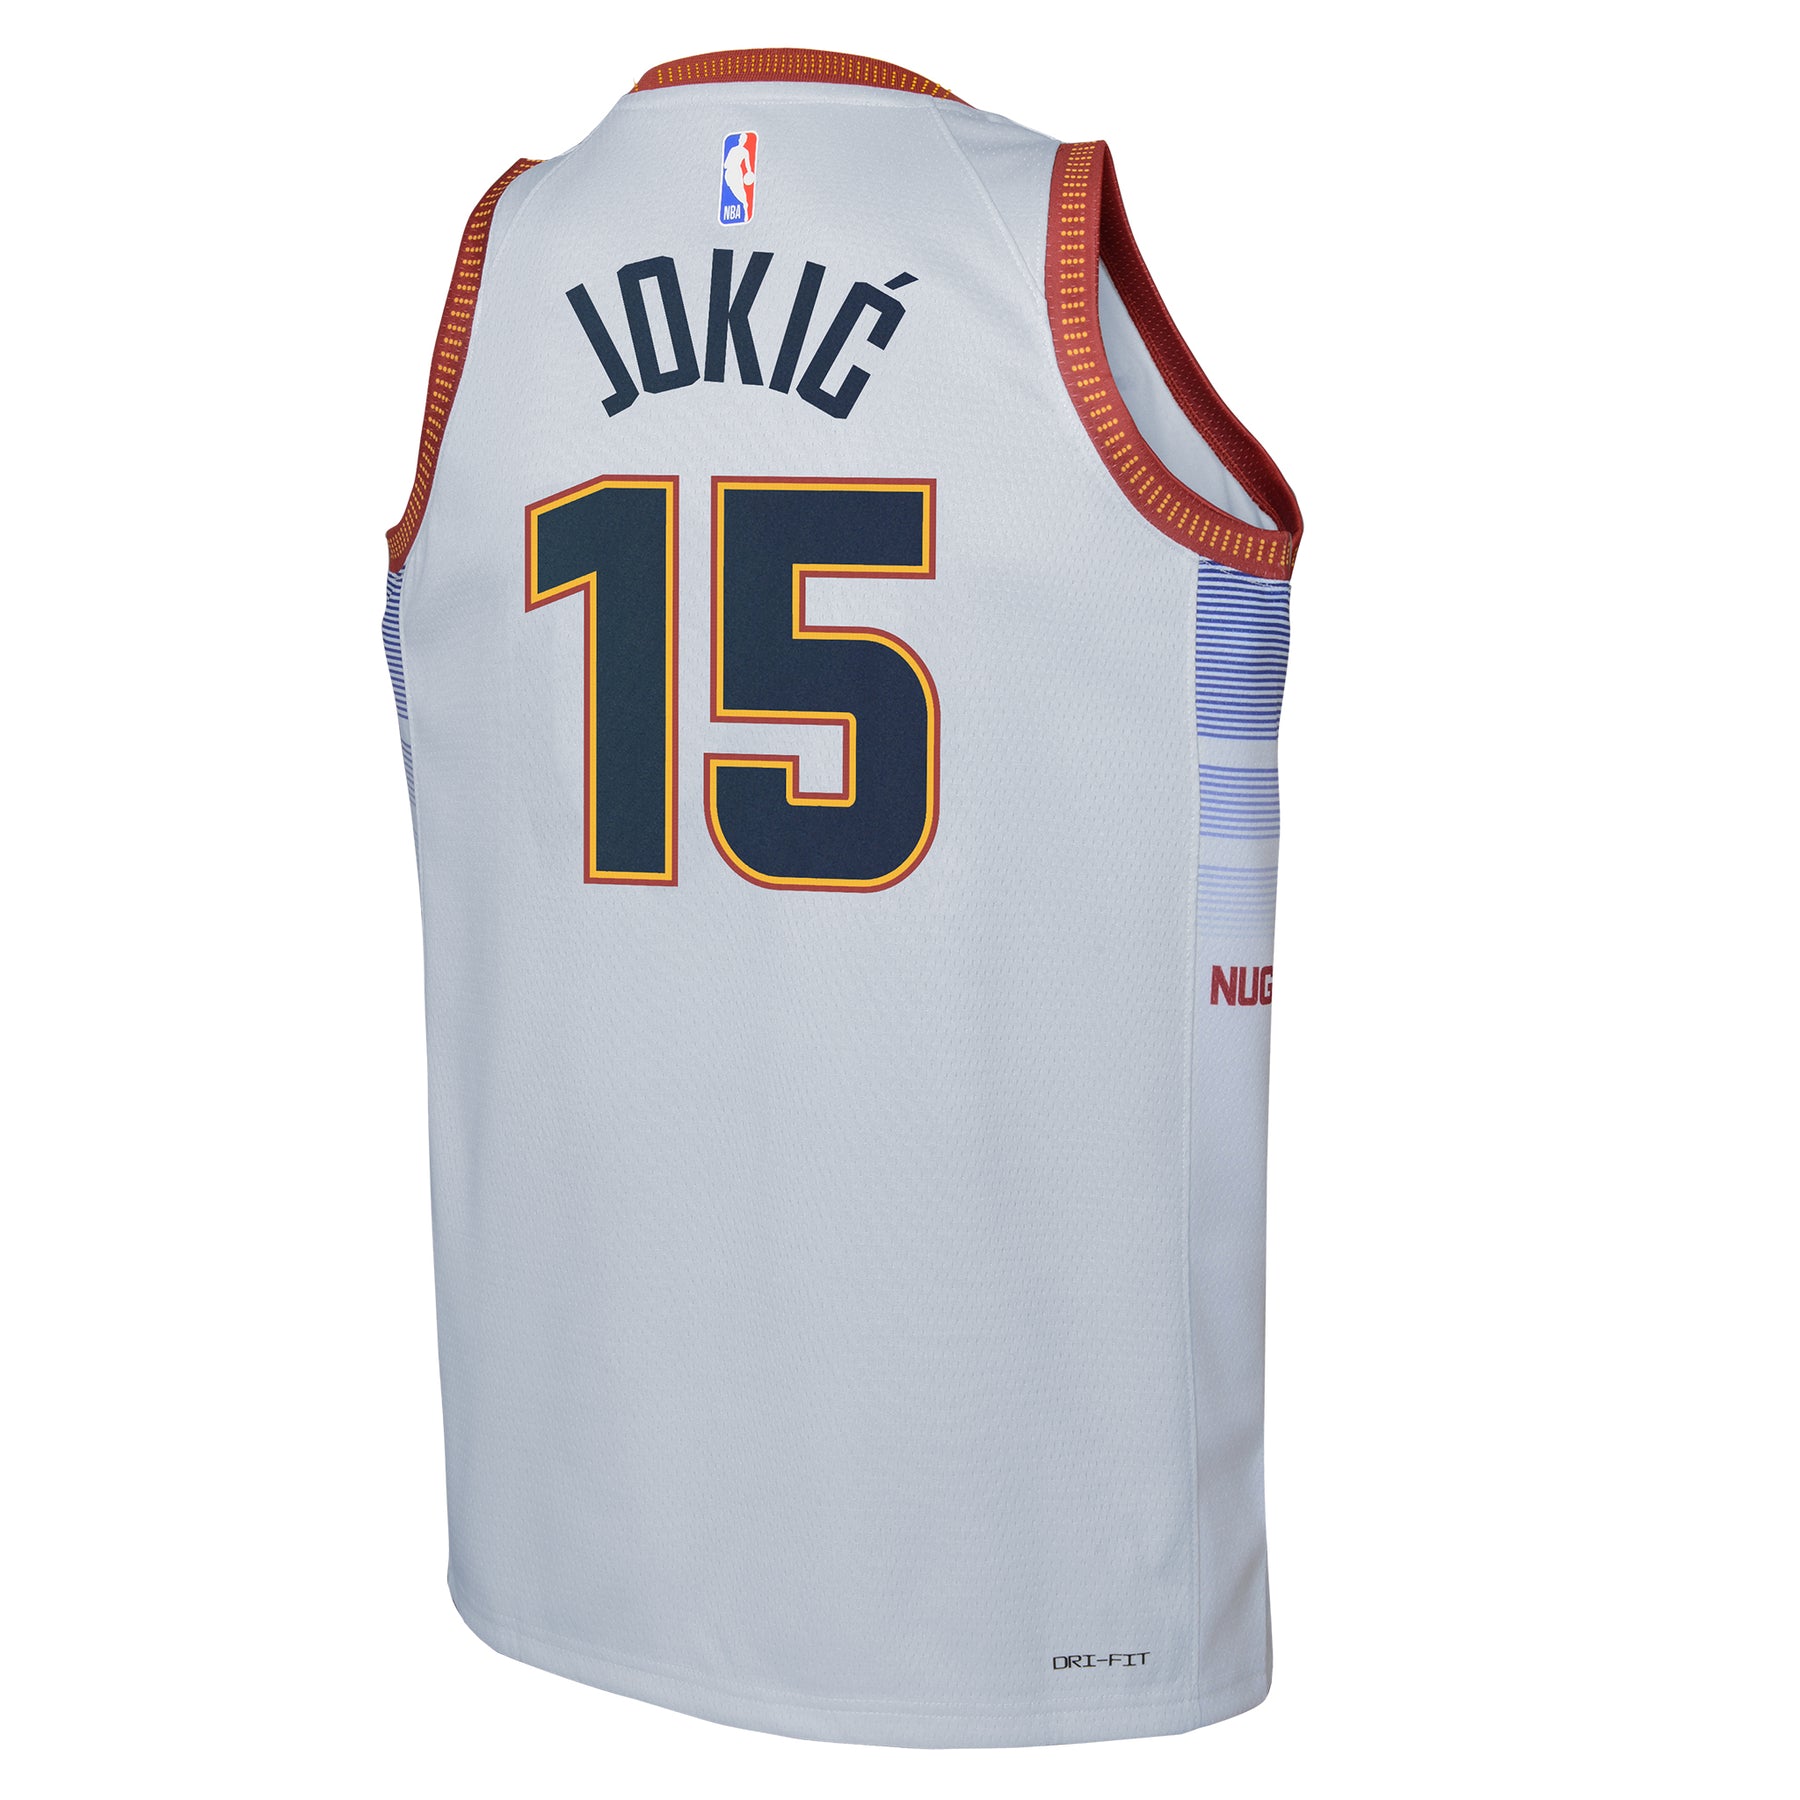 Jokic/Nuggets City Edition Replica Jersey